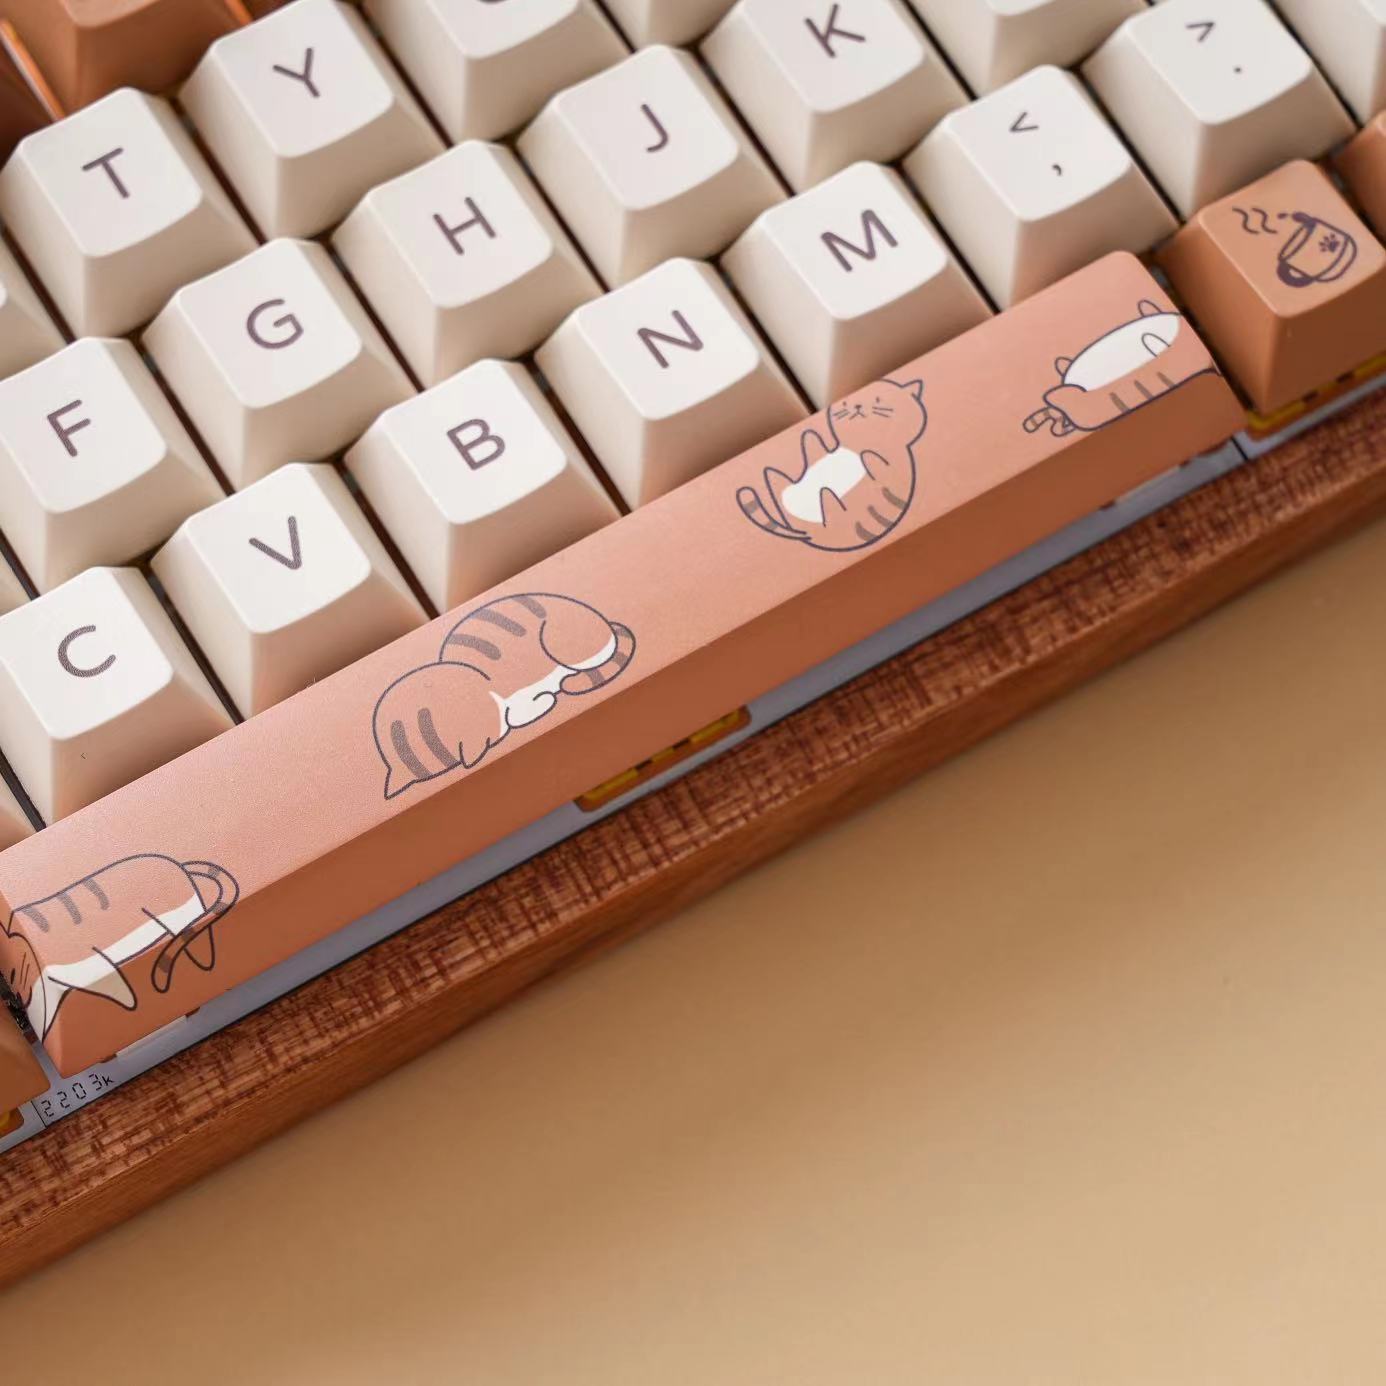 YUNZII SKYLOONG GK61 / GK68 Lite-Gasket Keyboard Kit With Wooden 